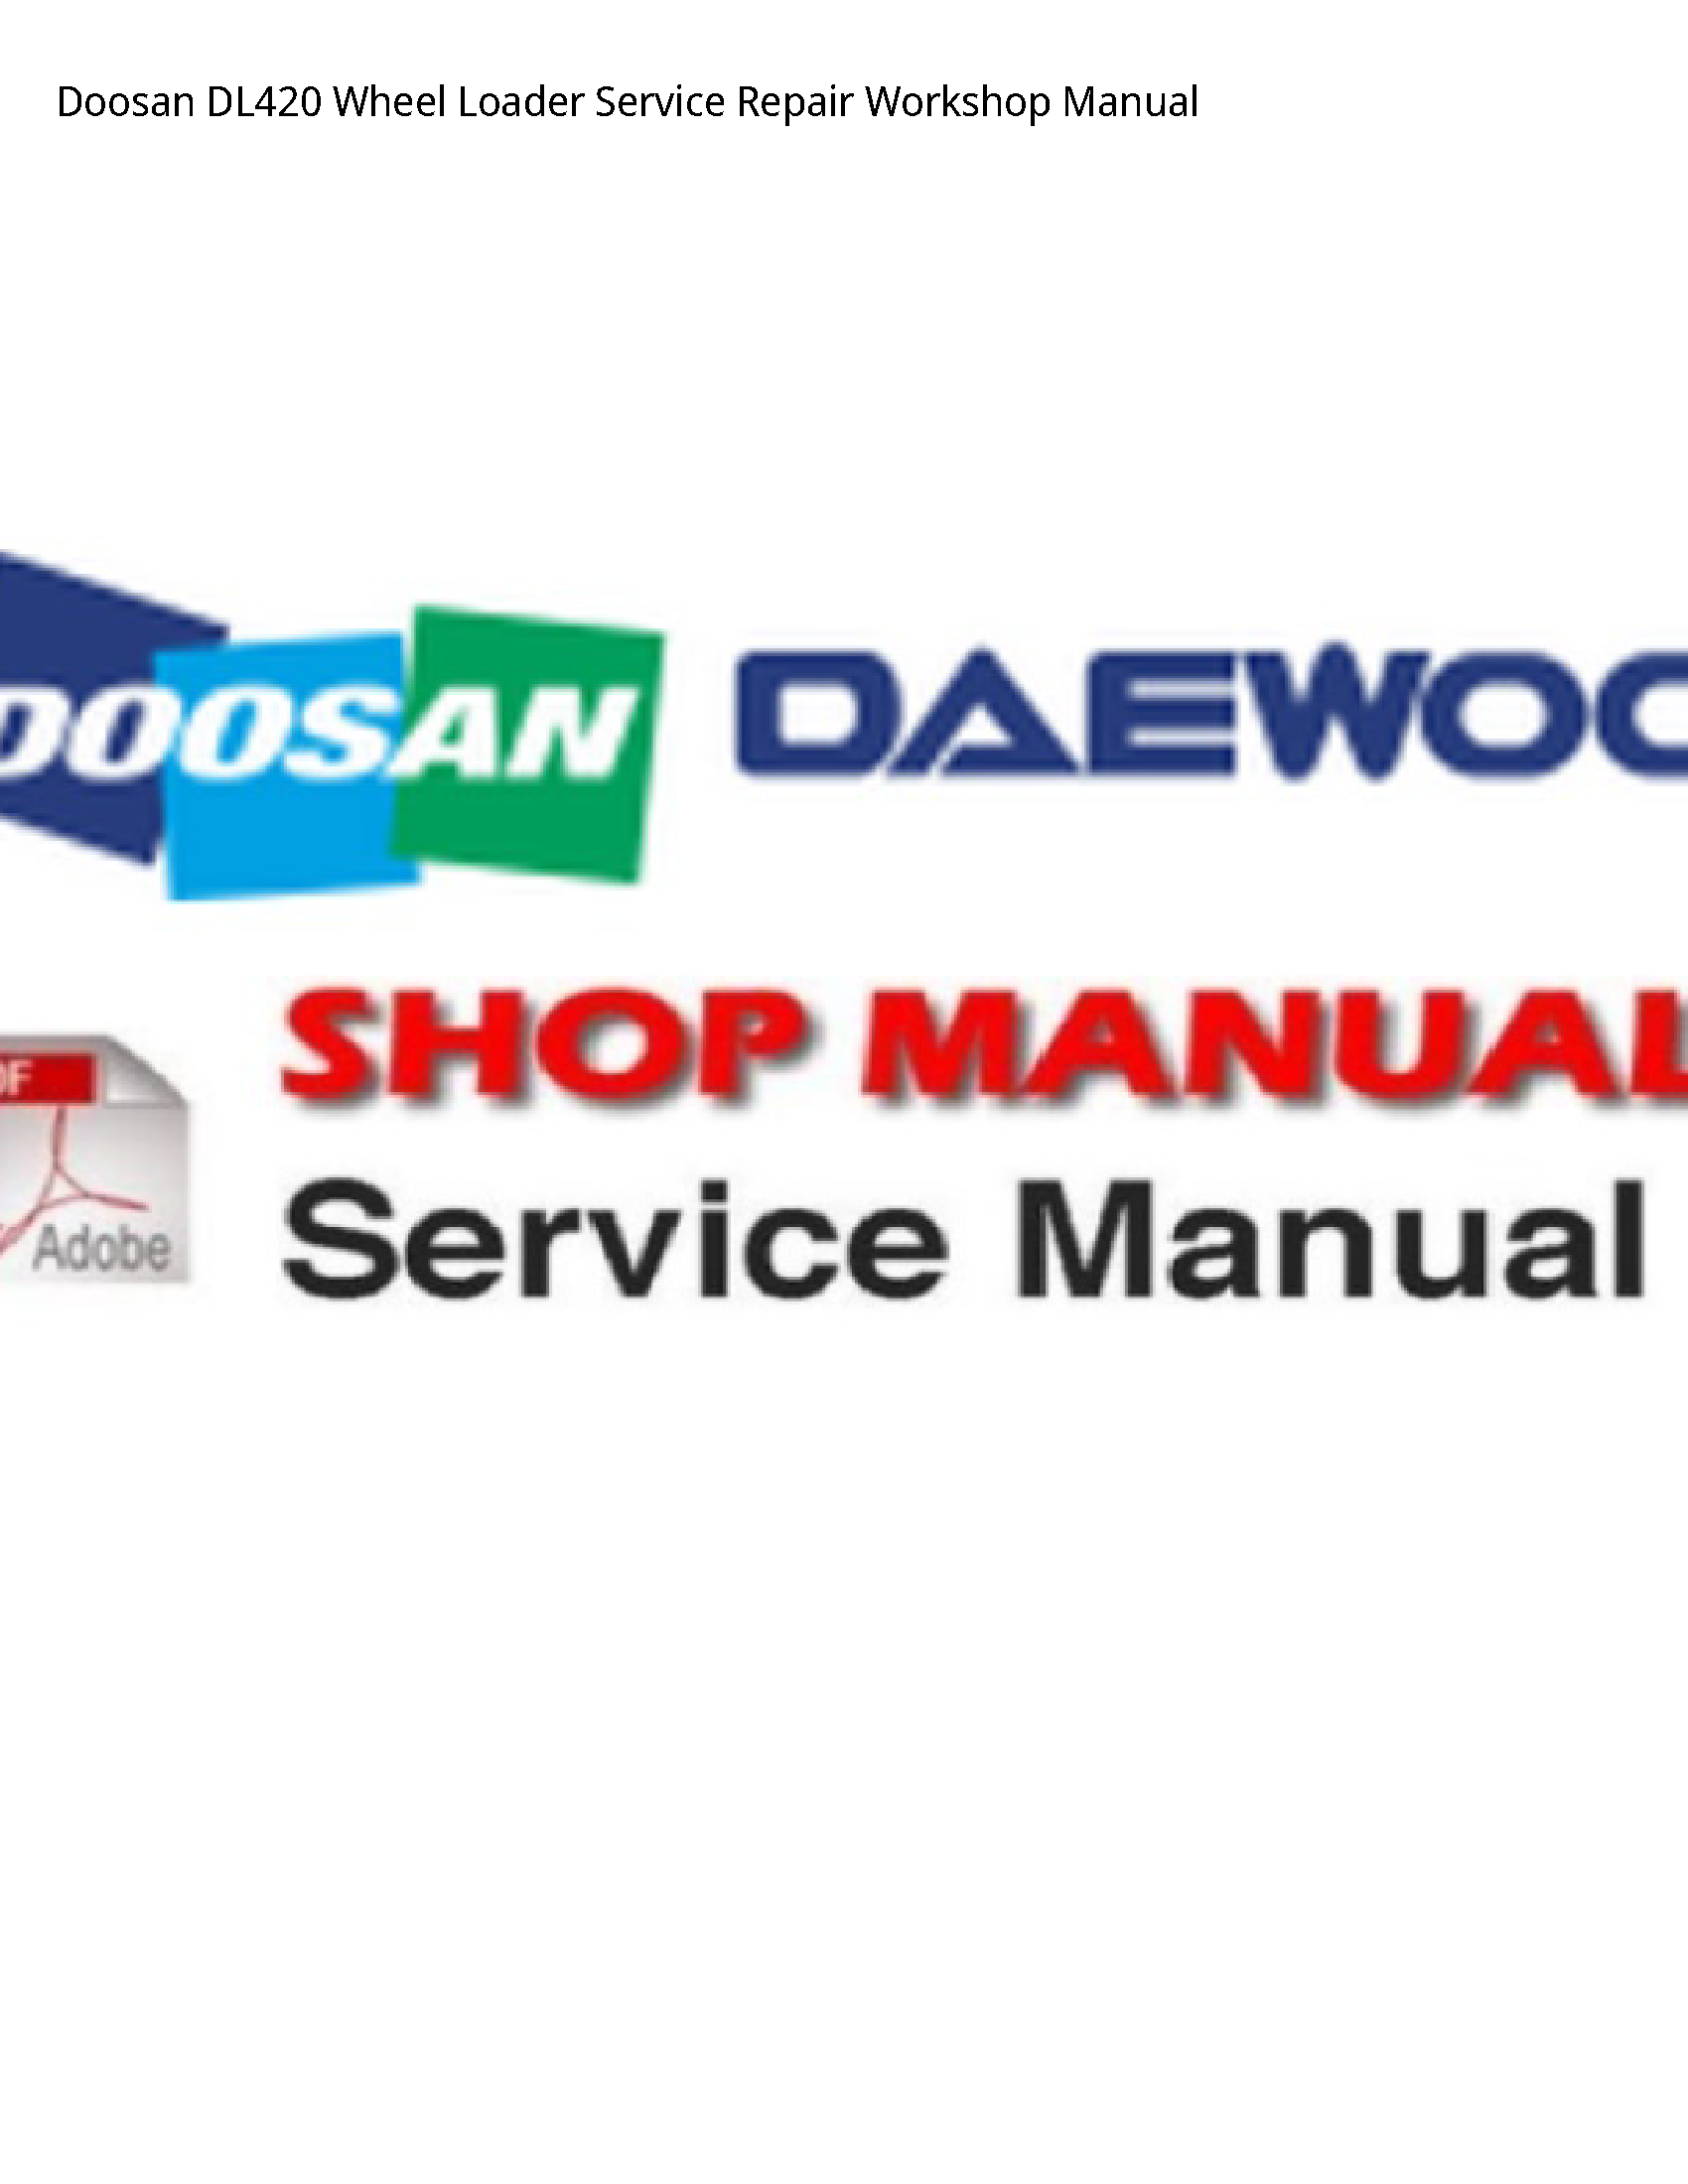 Doosan DL420 Wheel Loader manual